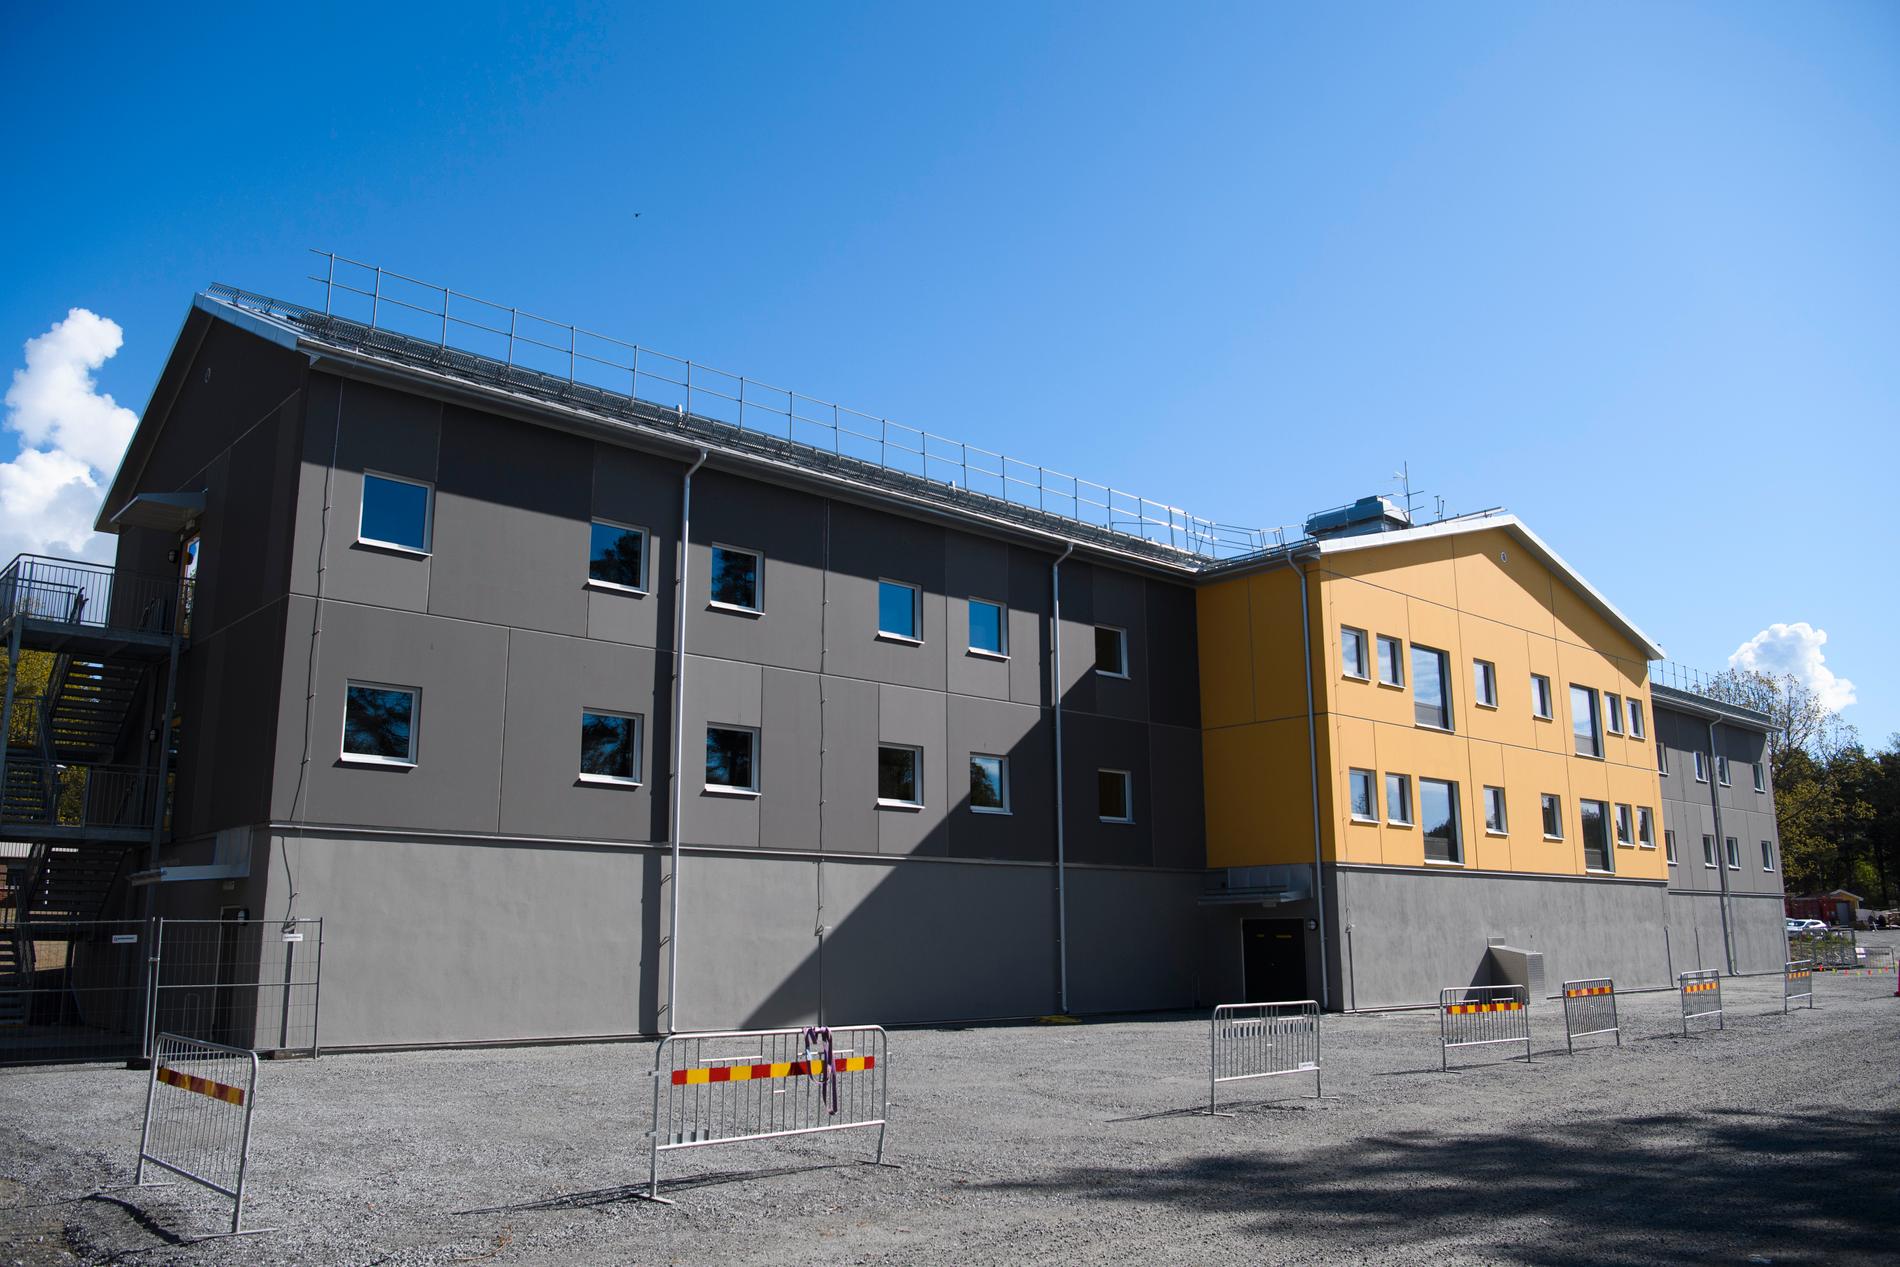 Escape from Skenäs: Five Prisoners Flee Low-Security Prison in Norrköping, Sweden